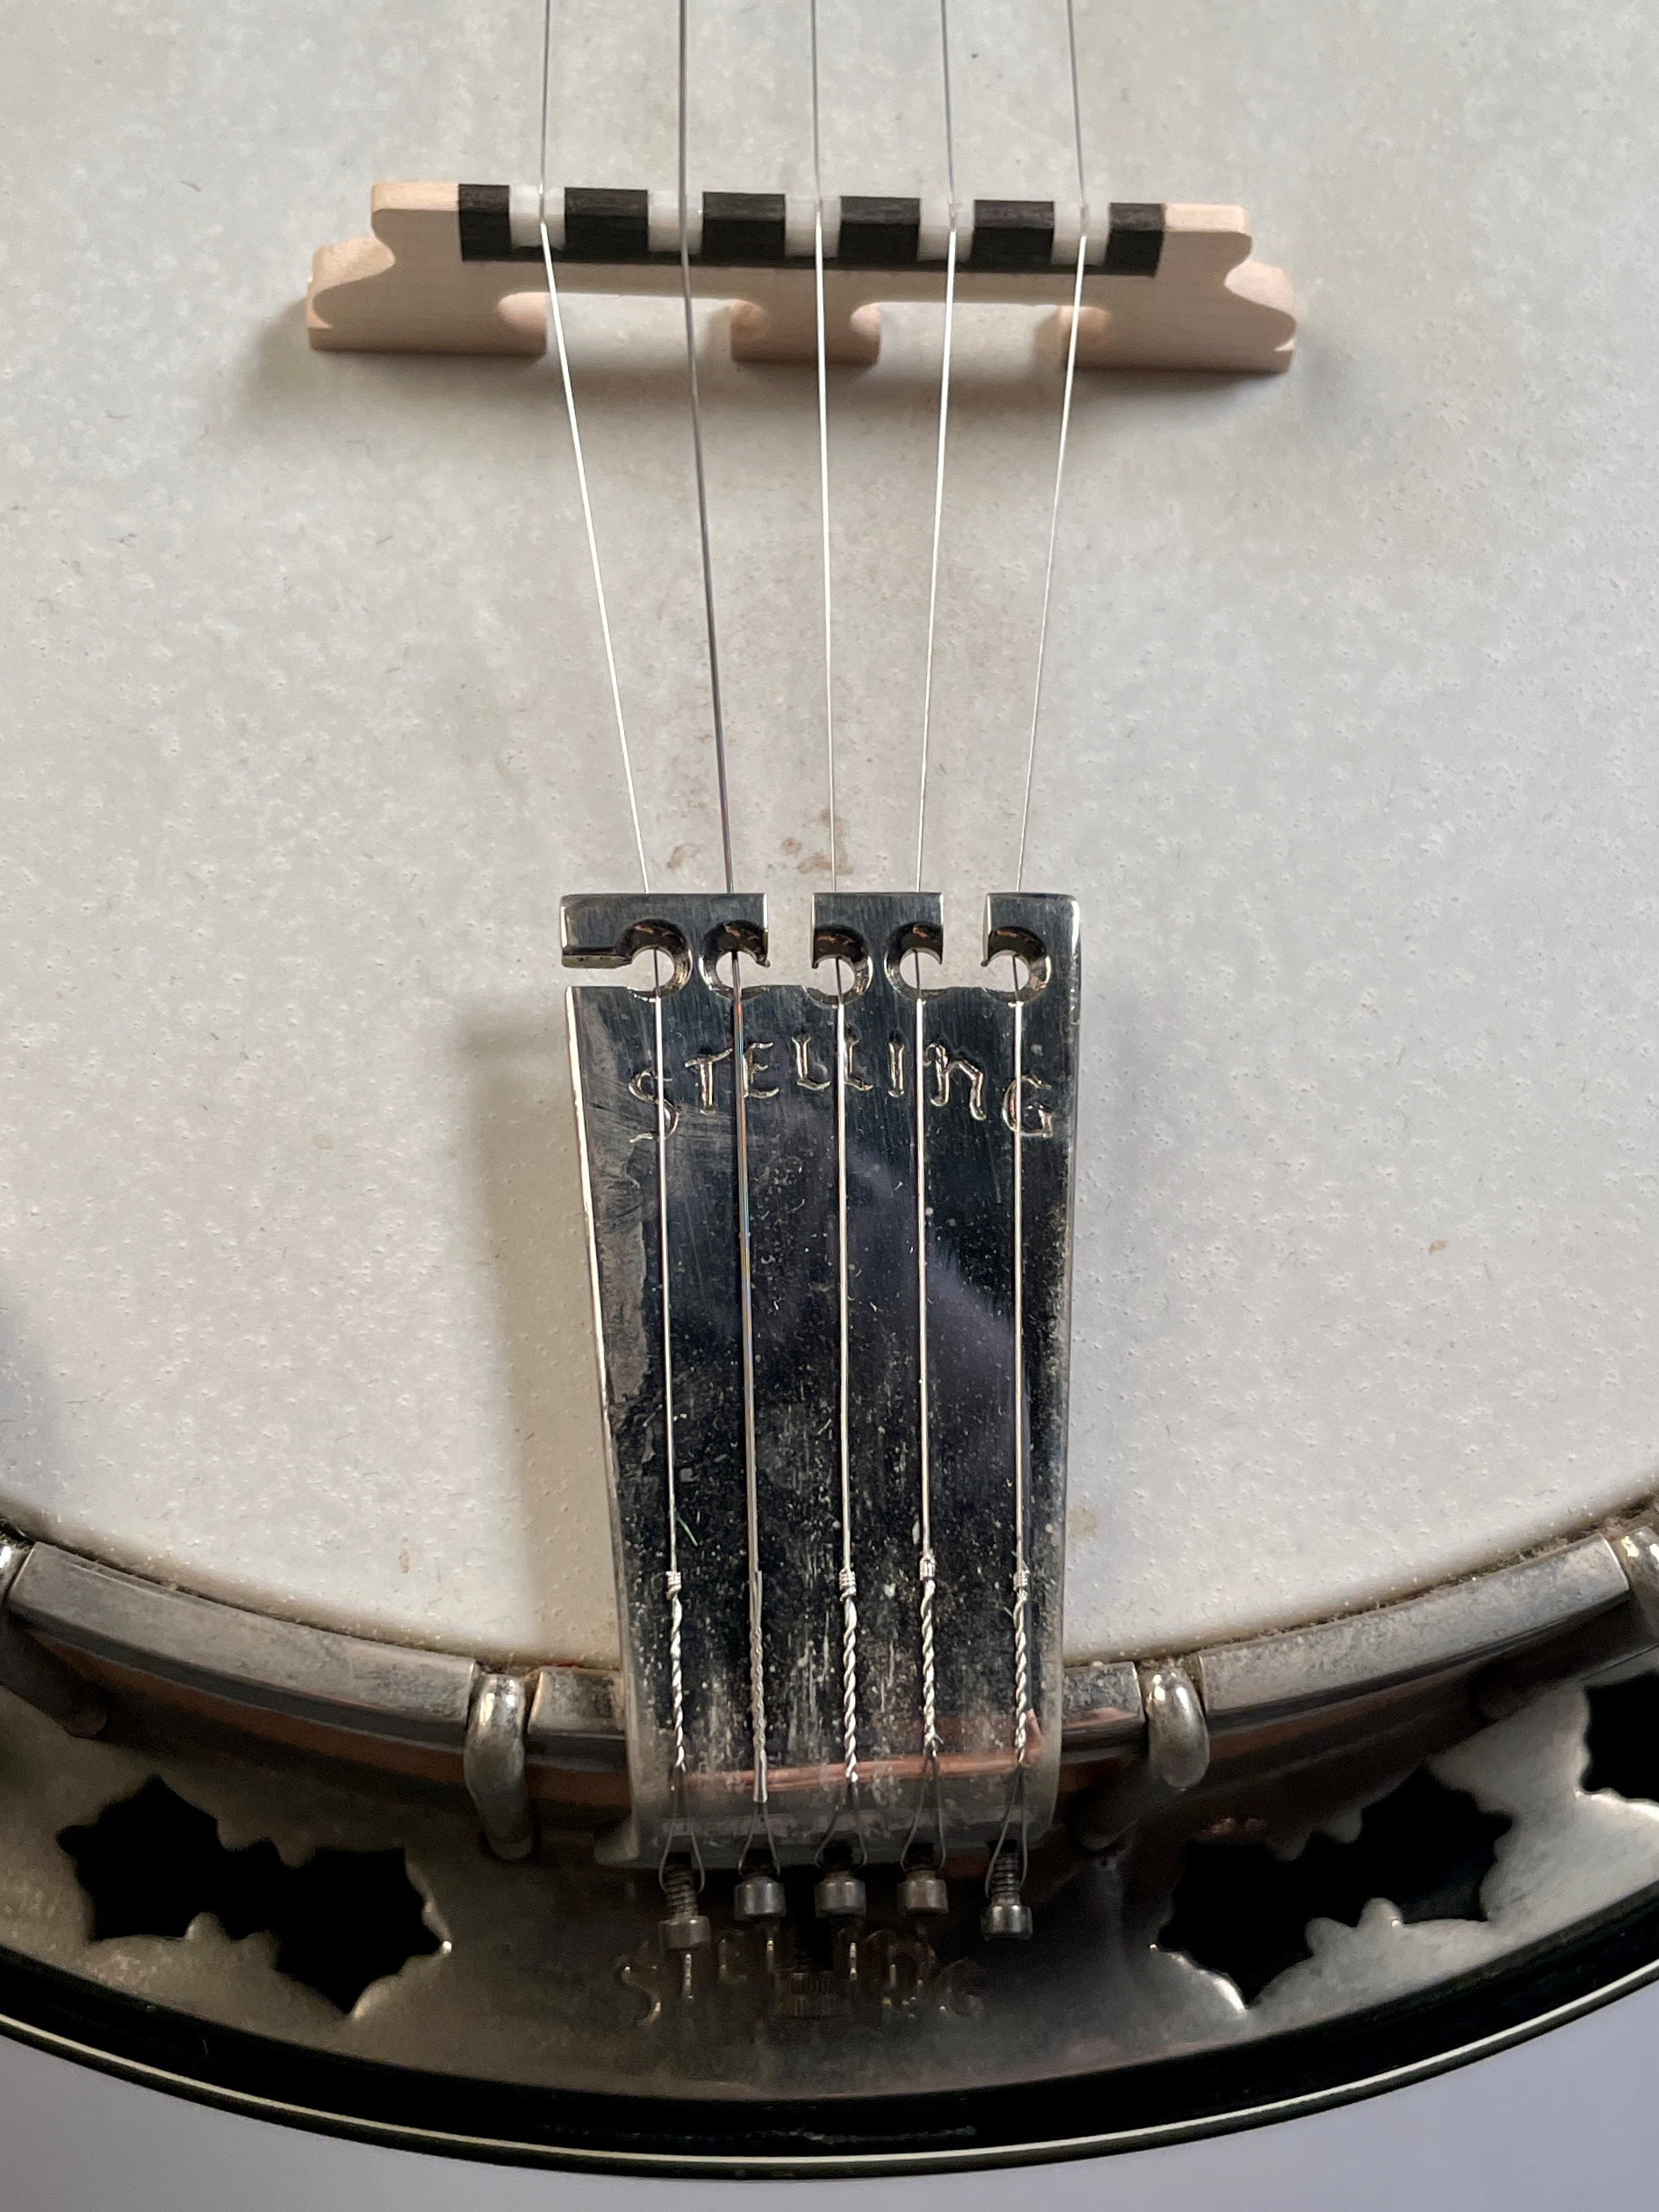 1978 Stelling Whitestar 5 string Banjo with Original Hardshell Case 